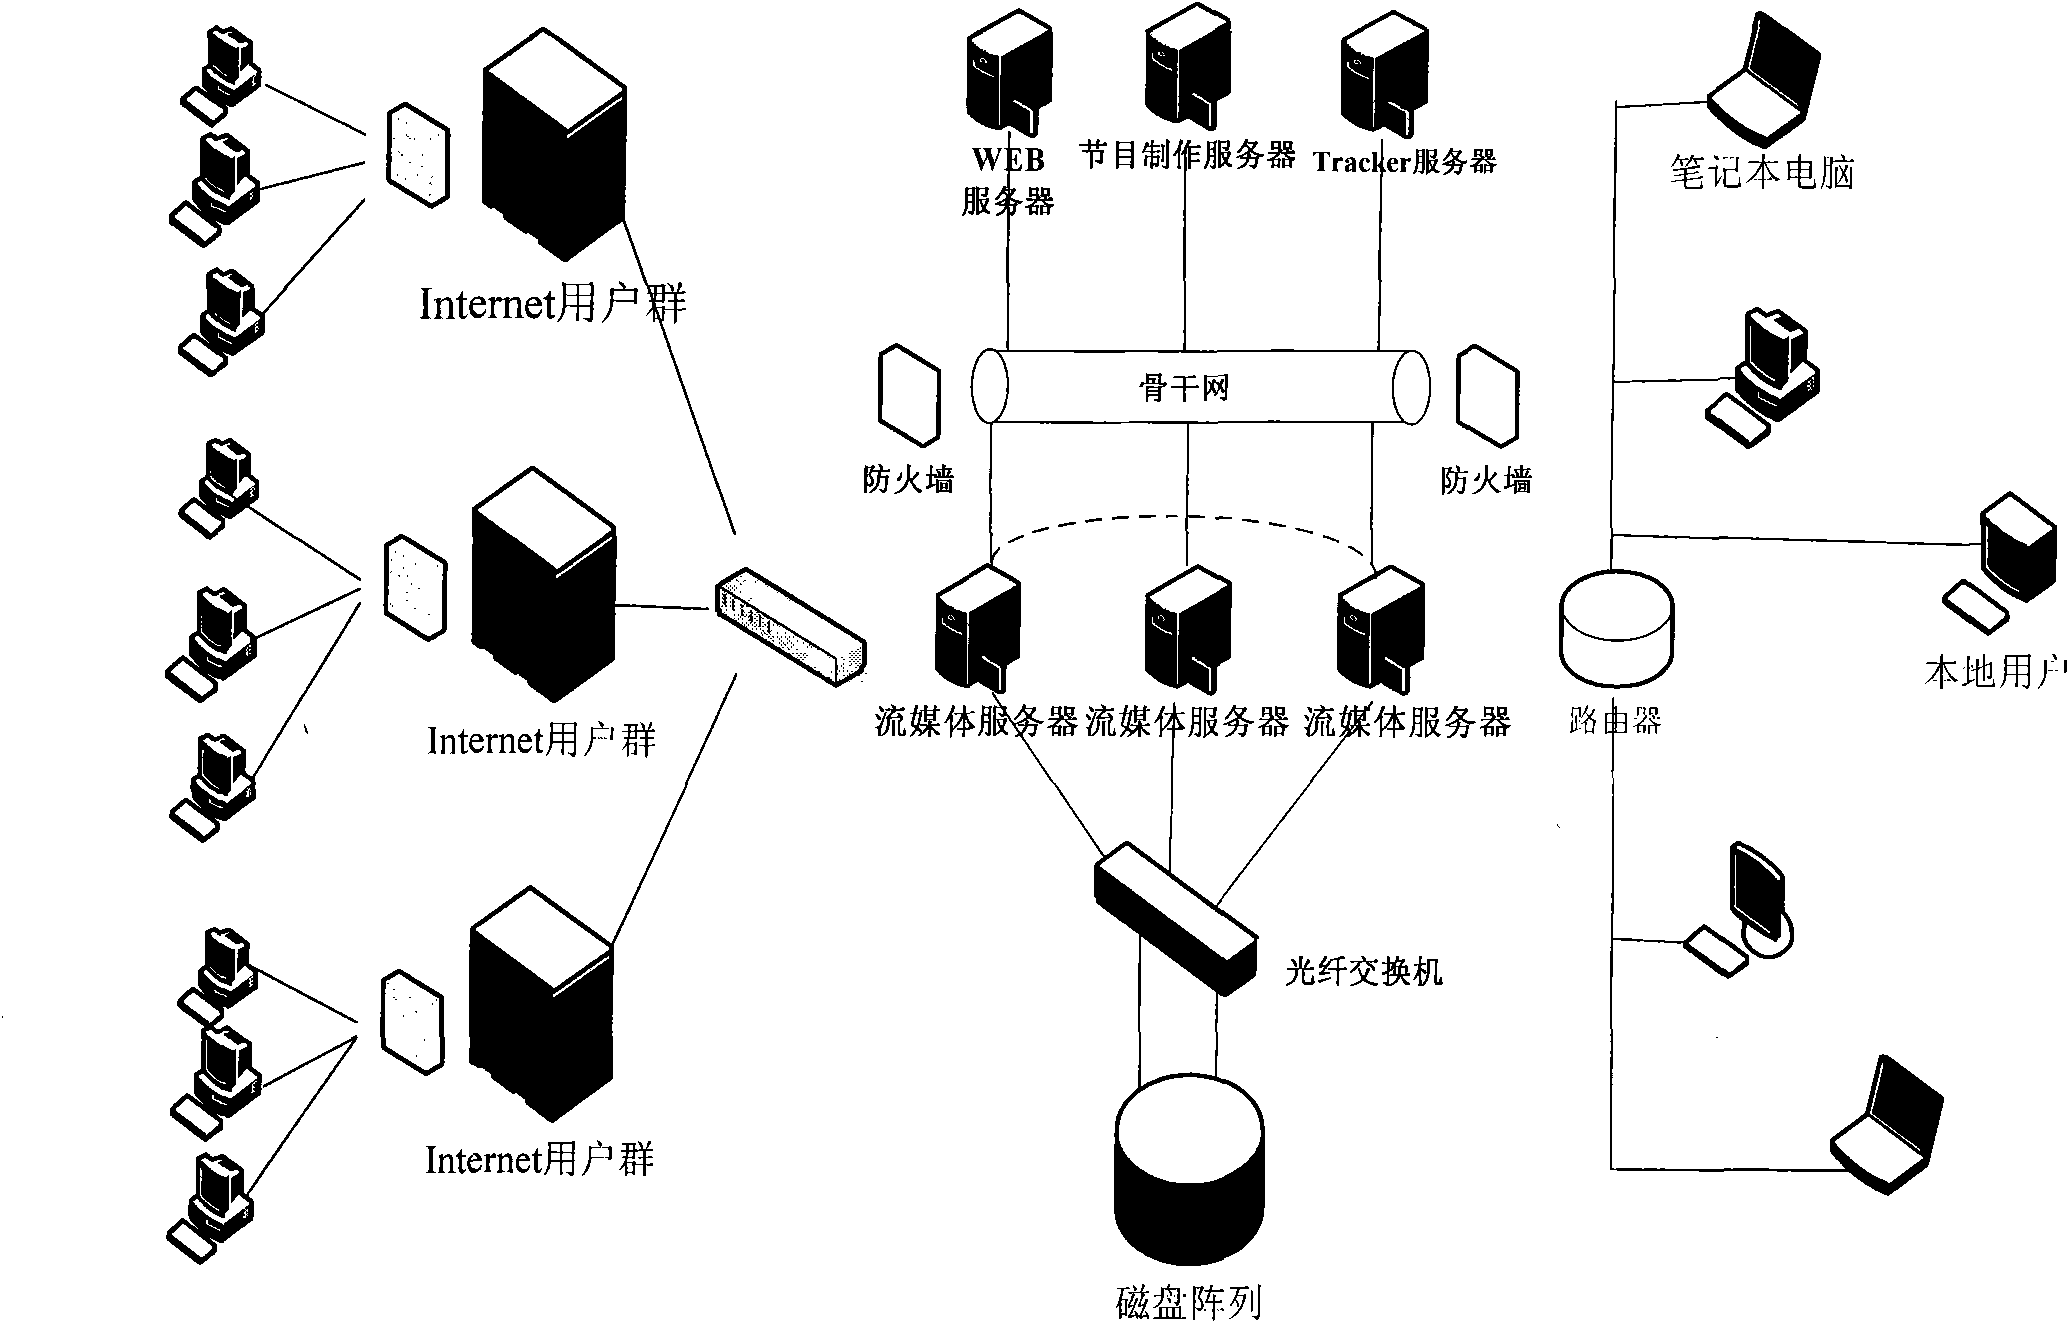 Video ordering transmission method based on peer-to-peer computing set-top box